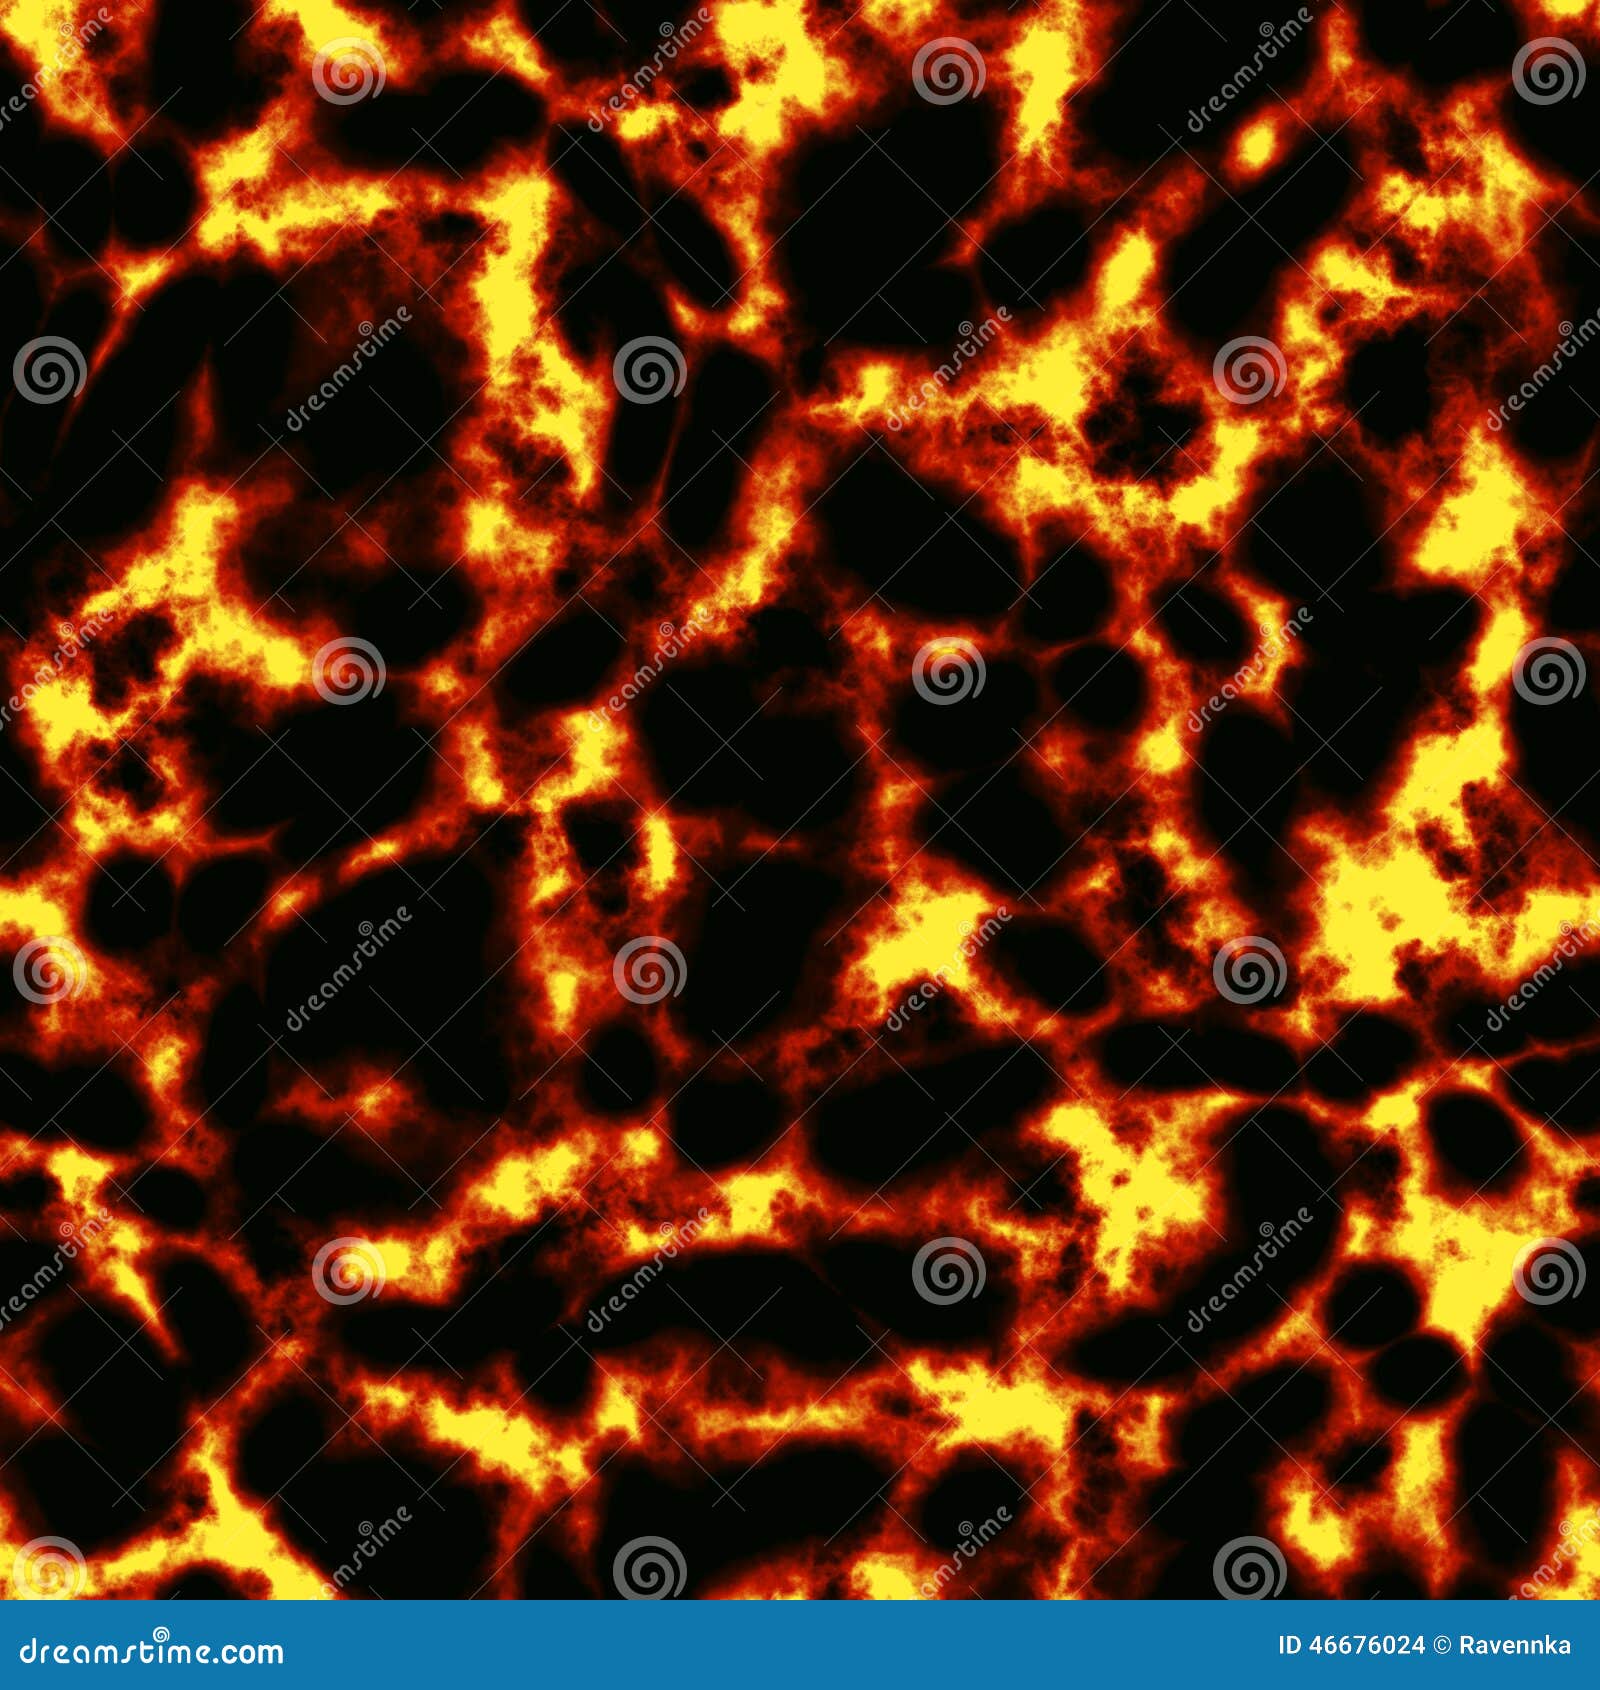 seamless lava texture